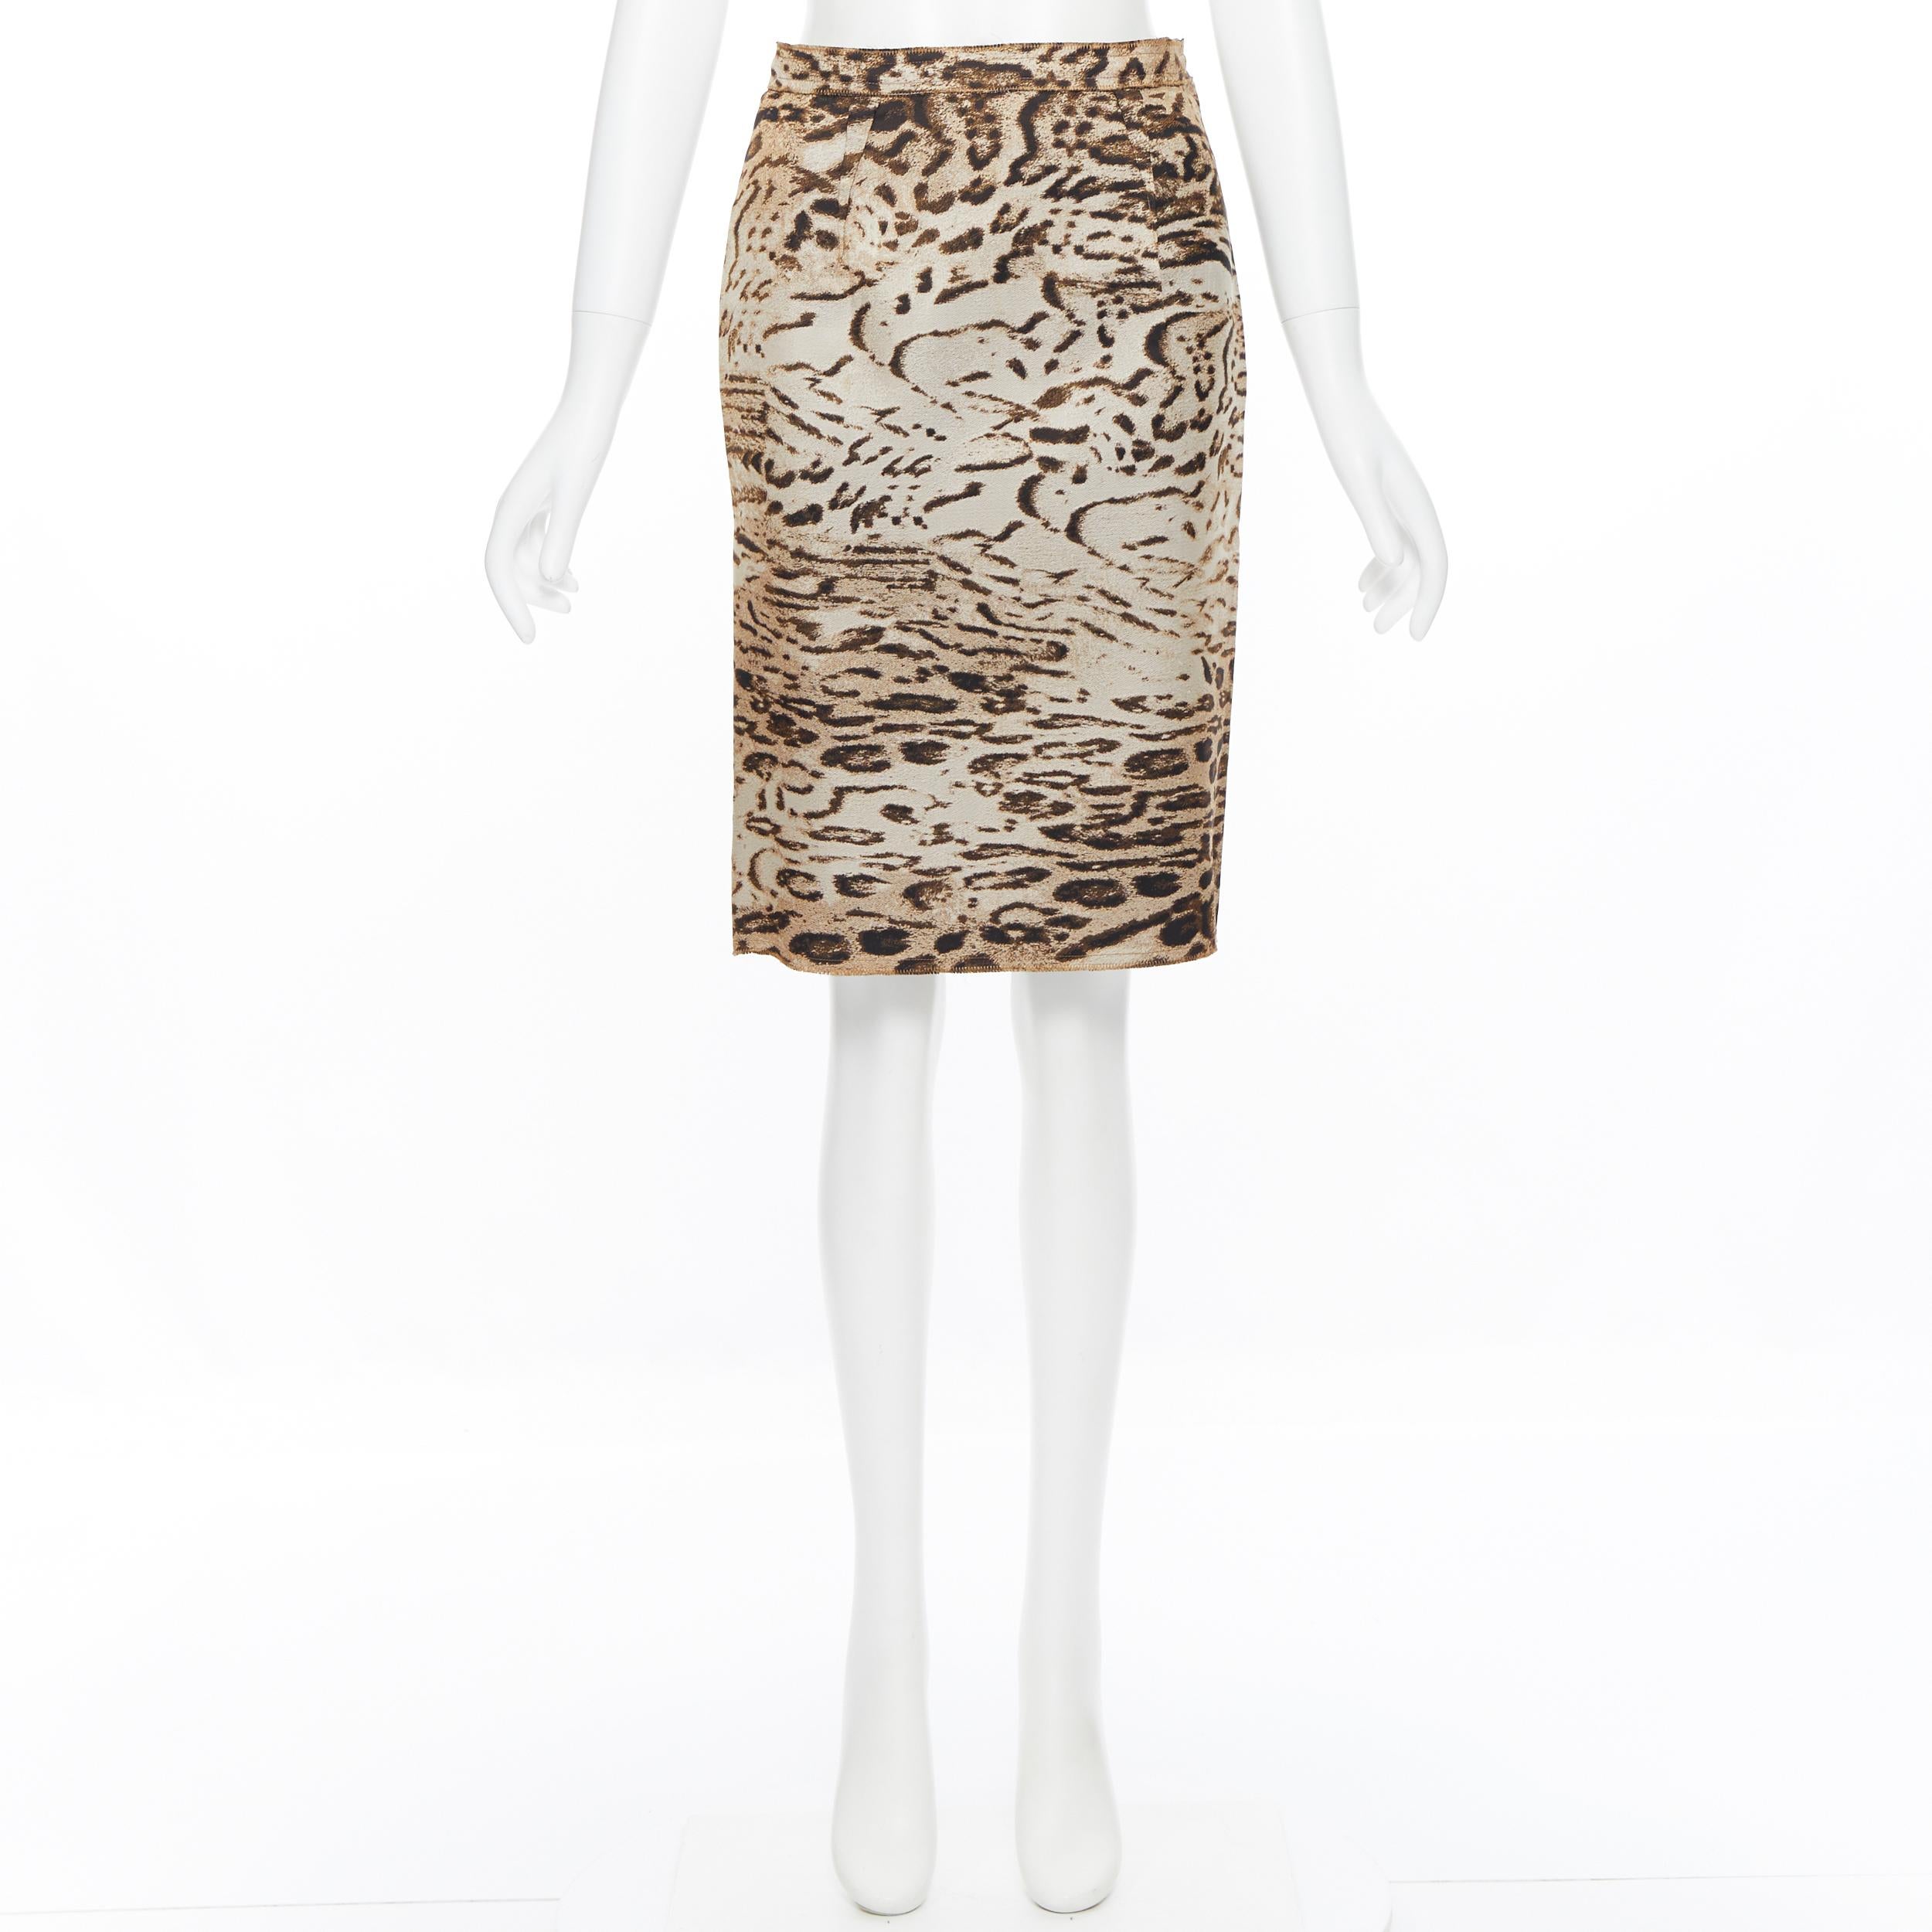 LANVIN Alber Elbaz 2010 brown leopard print pencil skirt FR36 XS For Sale 1